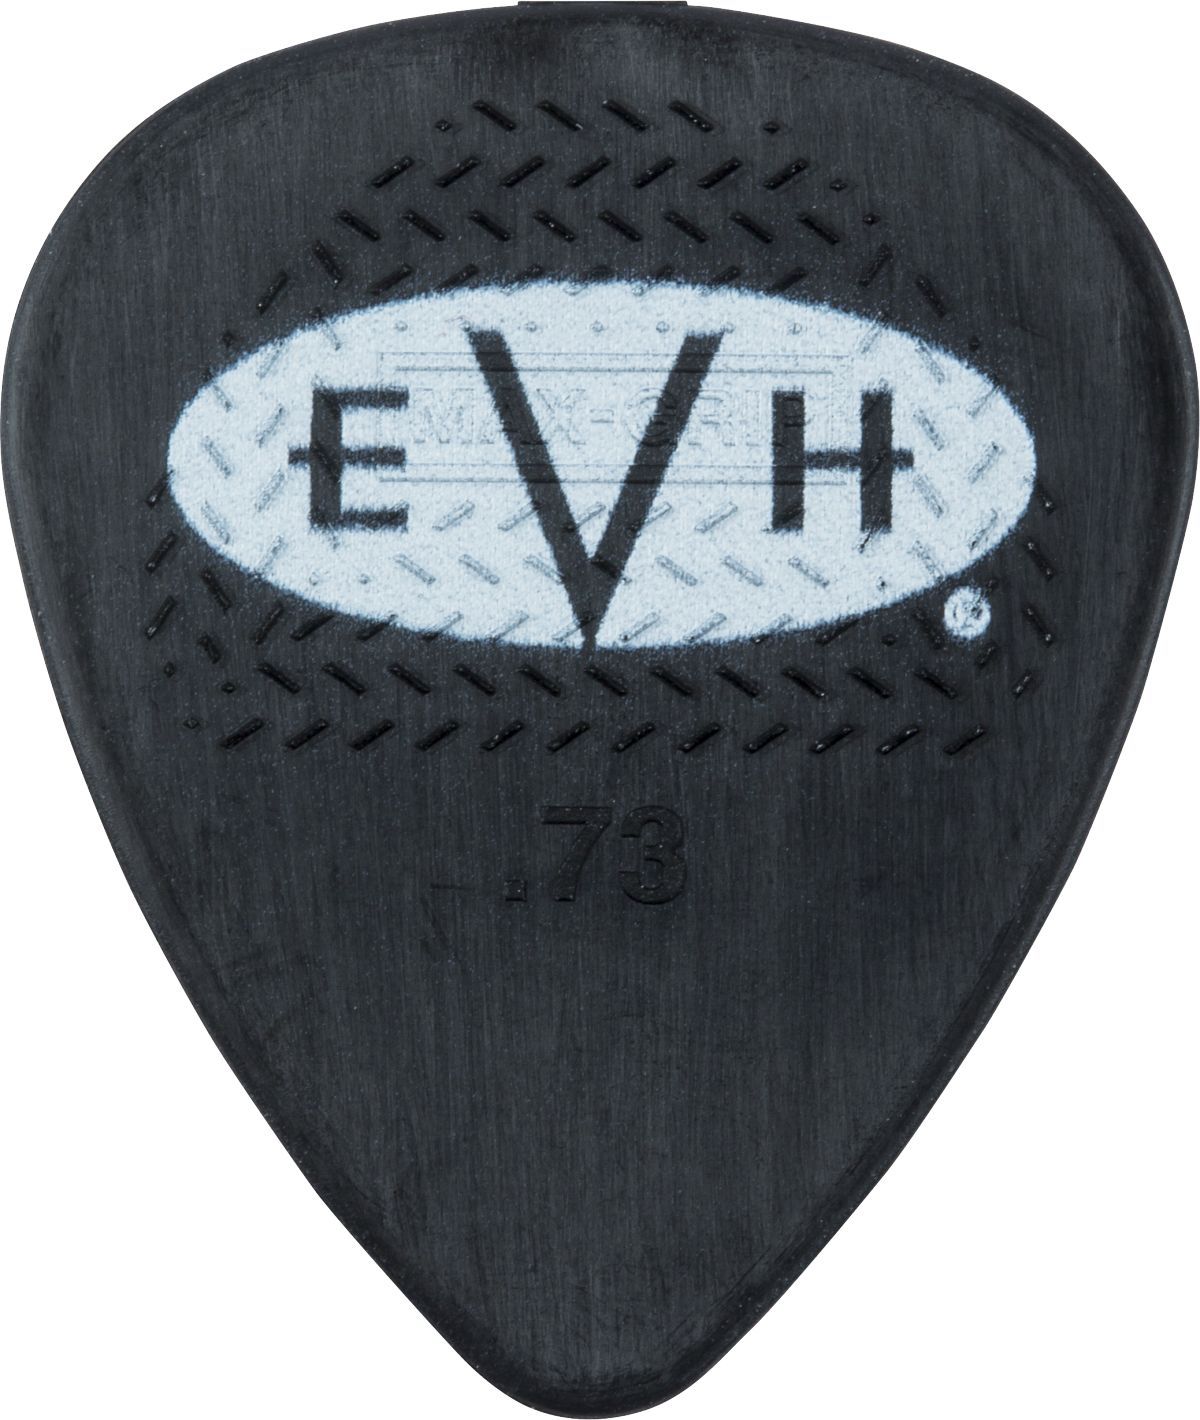 EVH Signature Picks Black/White .73 mm